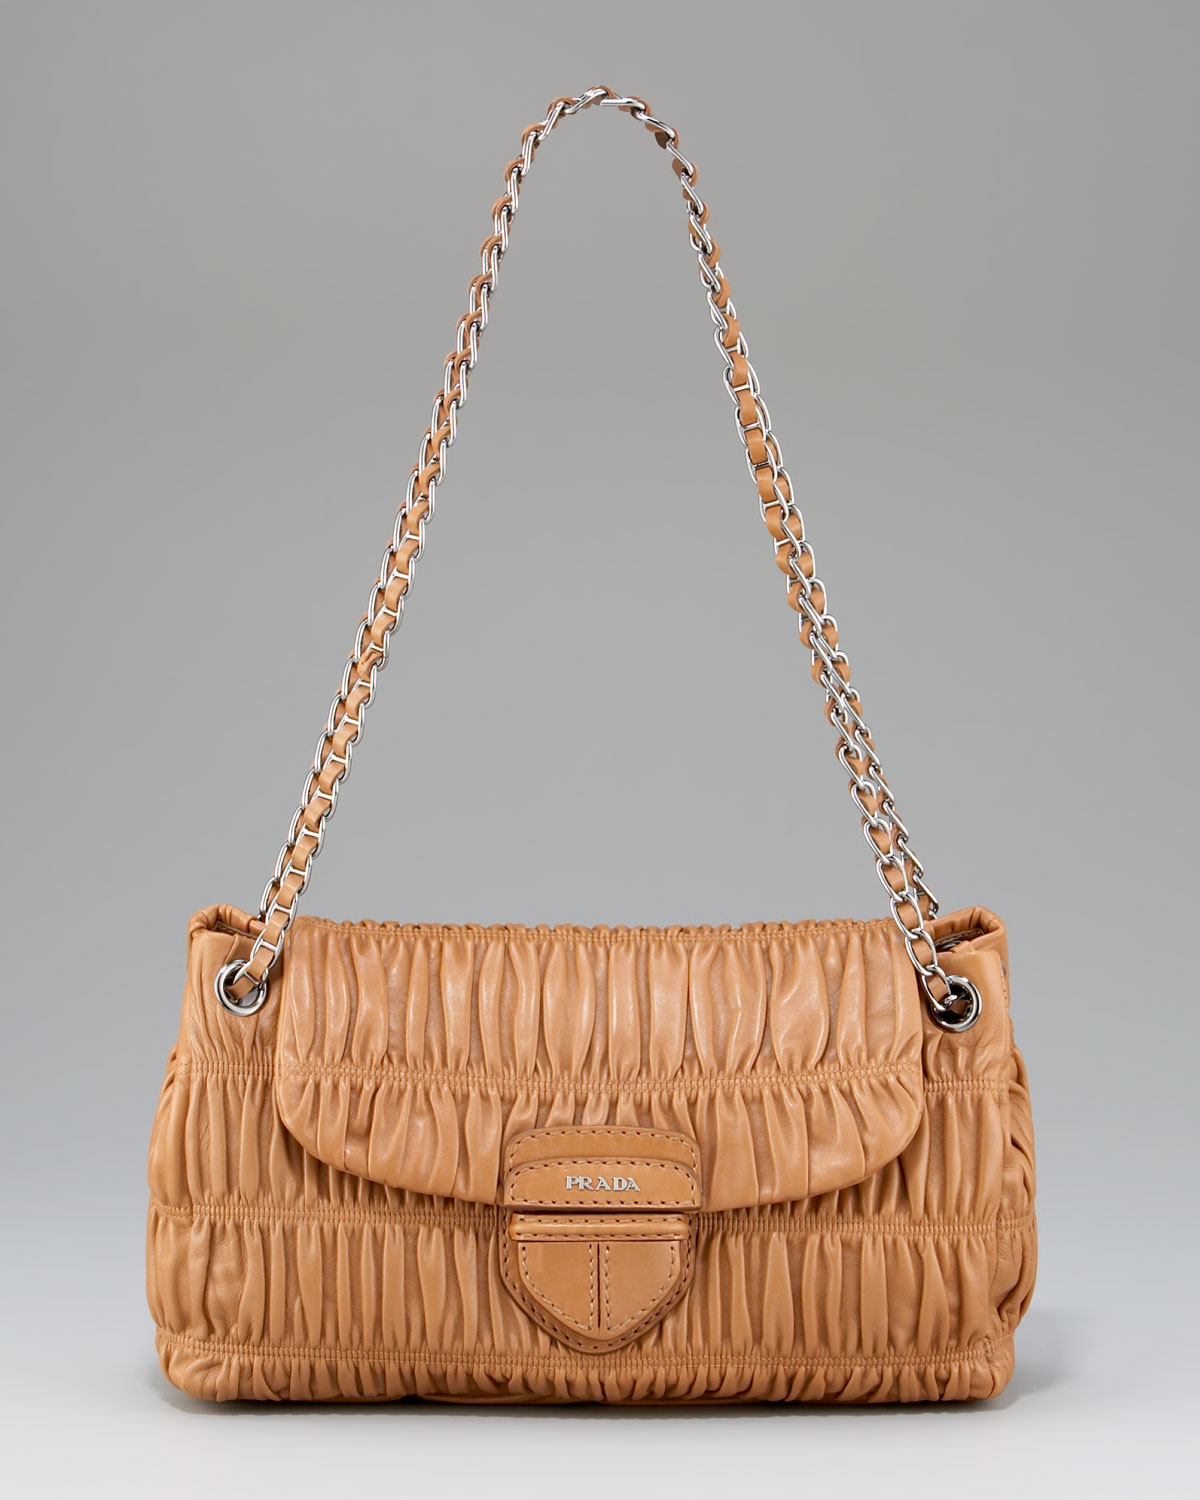 prada nylon handbags sale - Prada Napa Gaufre Chain Shoulder Bag, Canne in Brown (401 canne ...